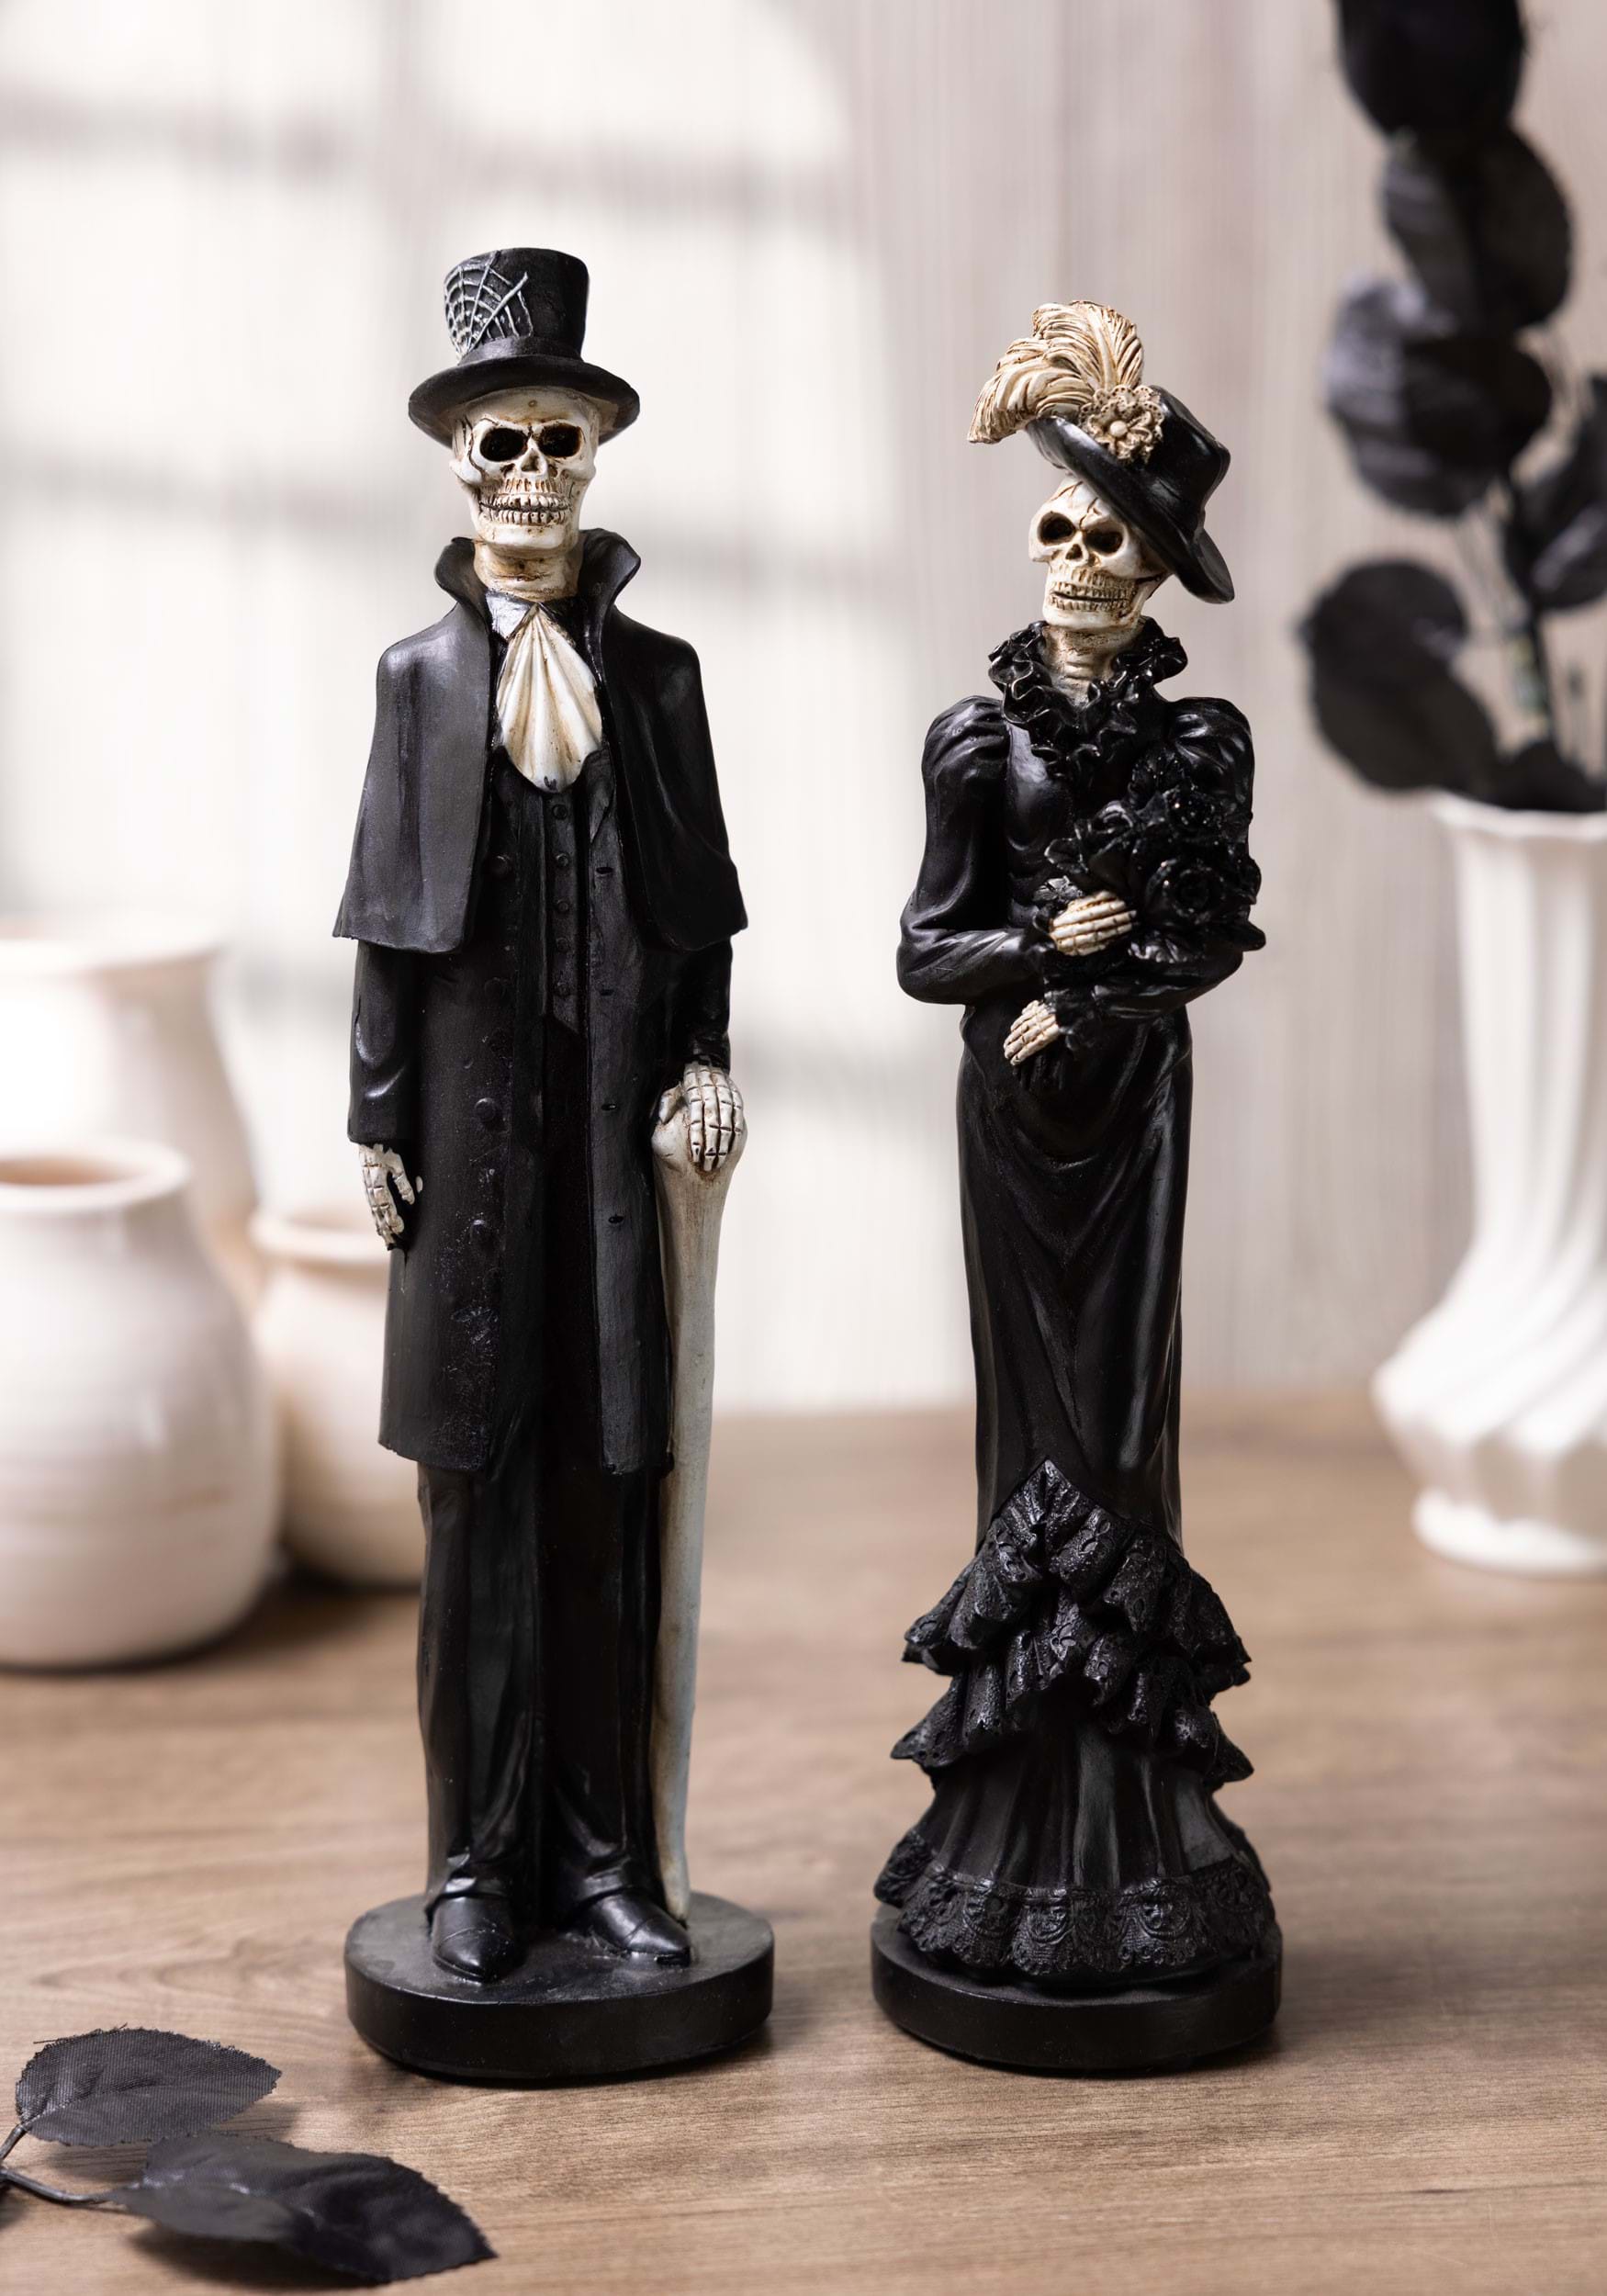 Set of Two Skeleton Figurines